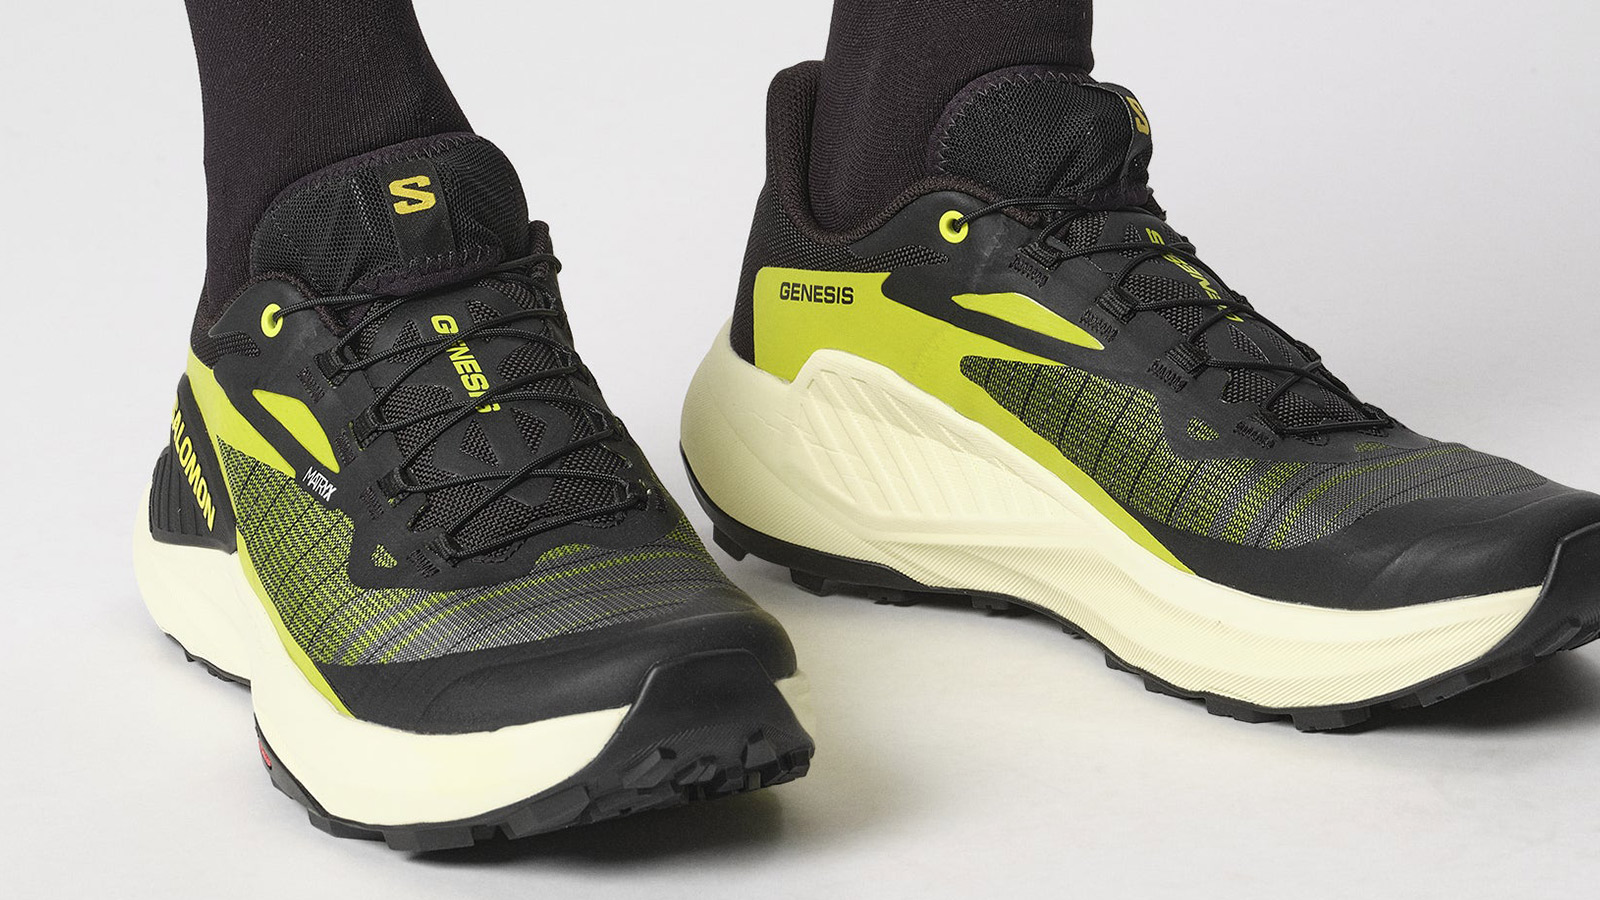 Salomon Genesis Men's Trail Running Shoes Deliver Agile Performance For ...